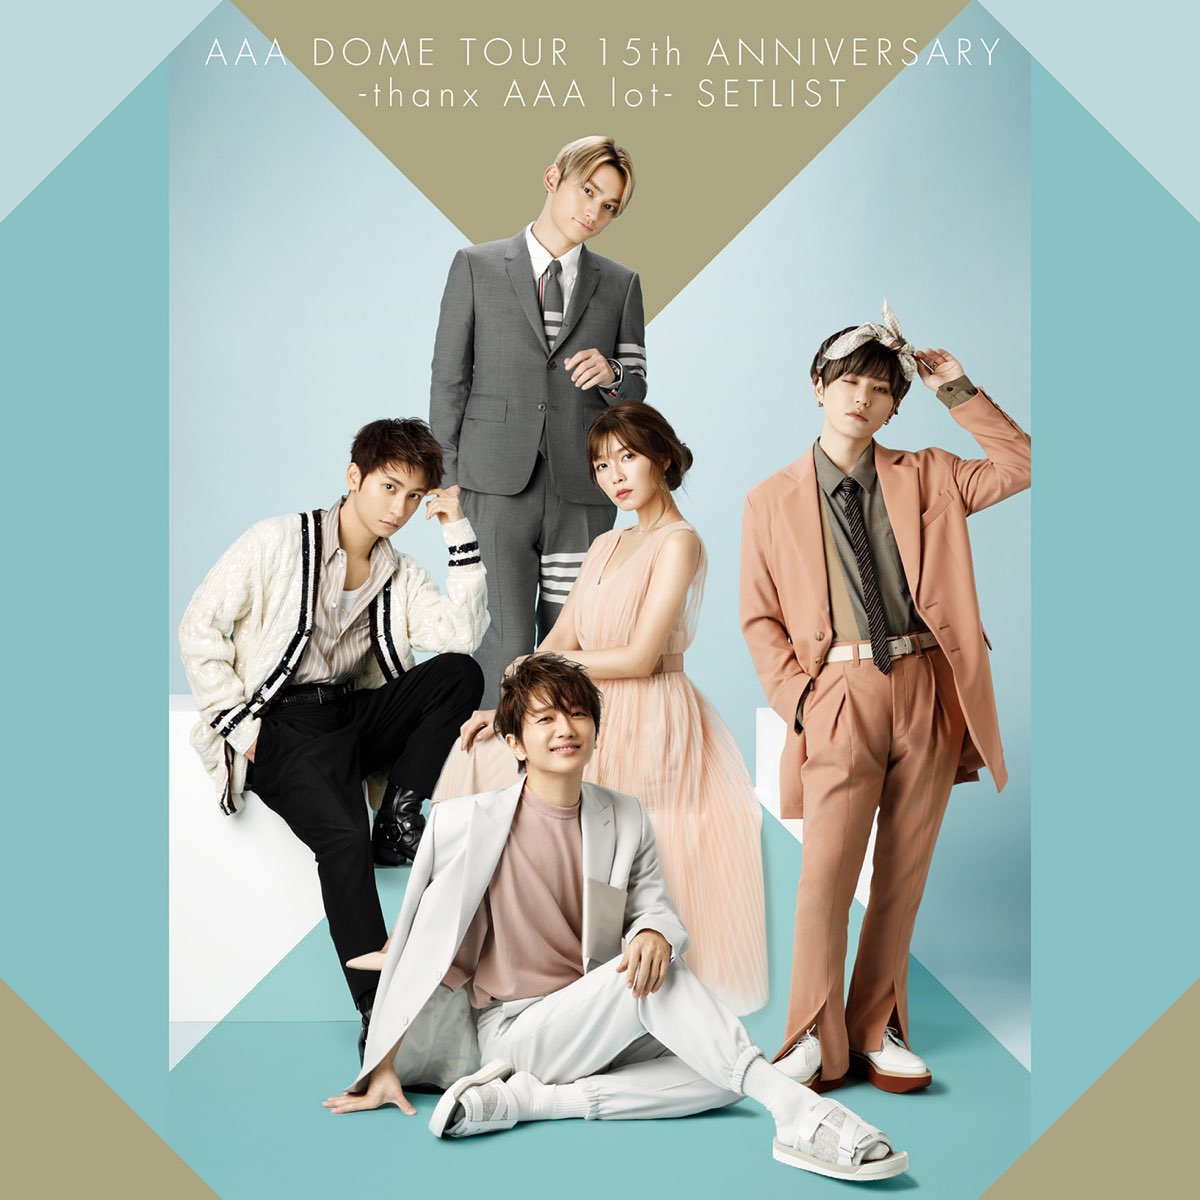 AAA DOME TOUR 15th ANNIVERSARY -thanx AAA lot- SETLIST》- AAA的